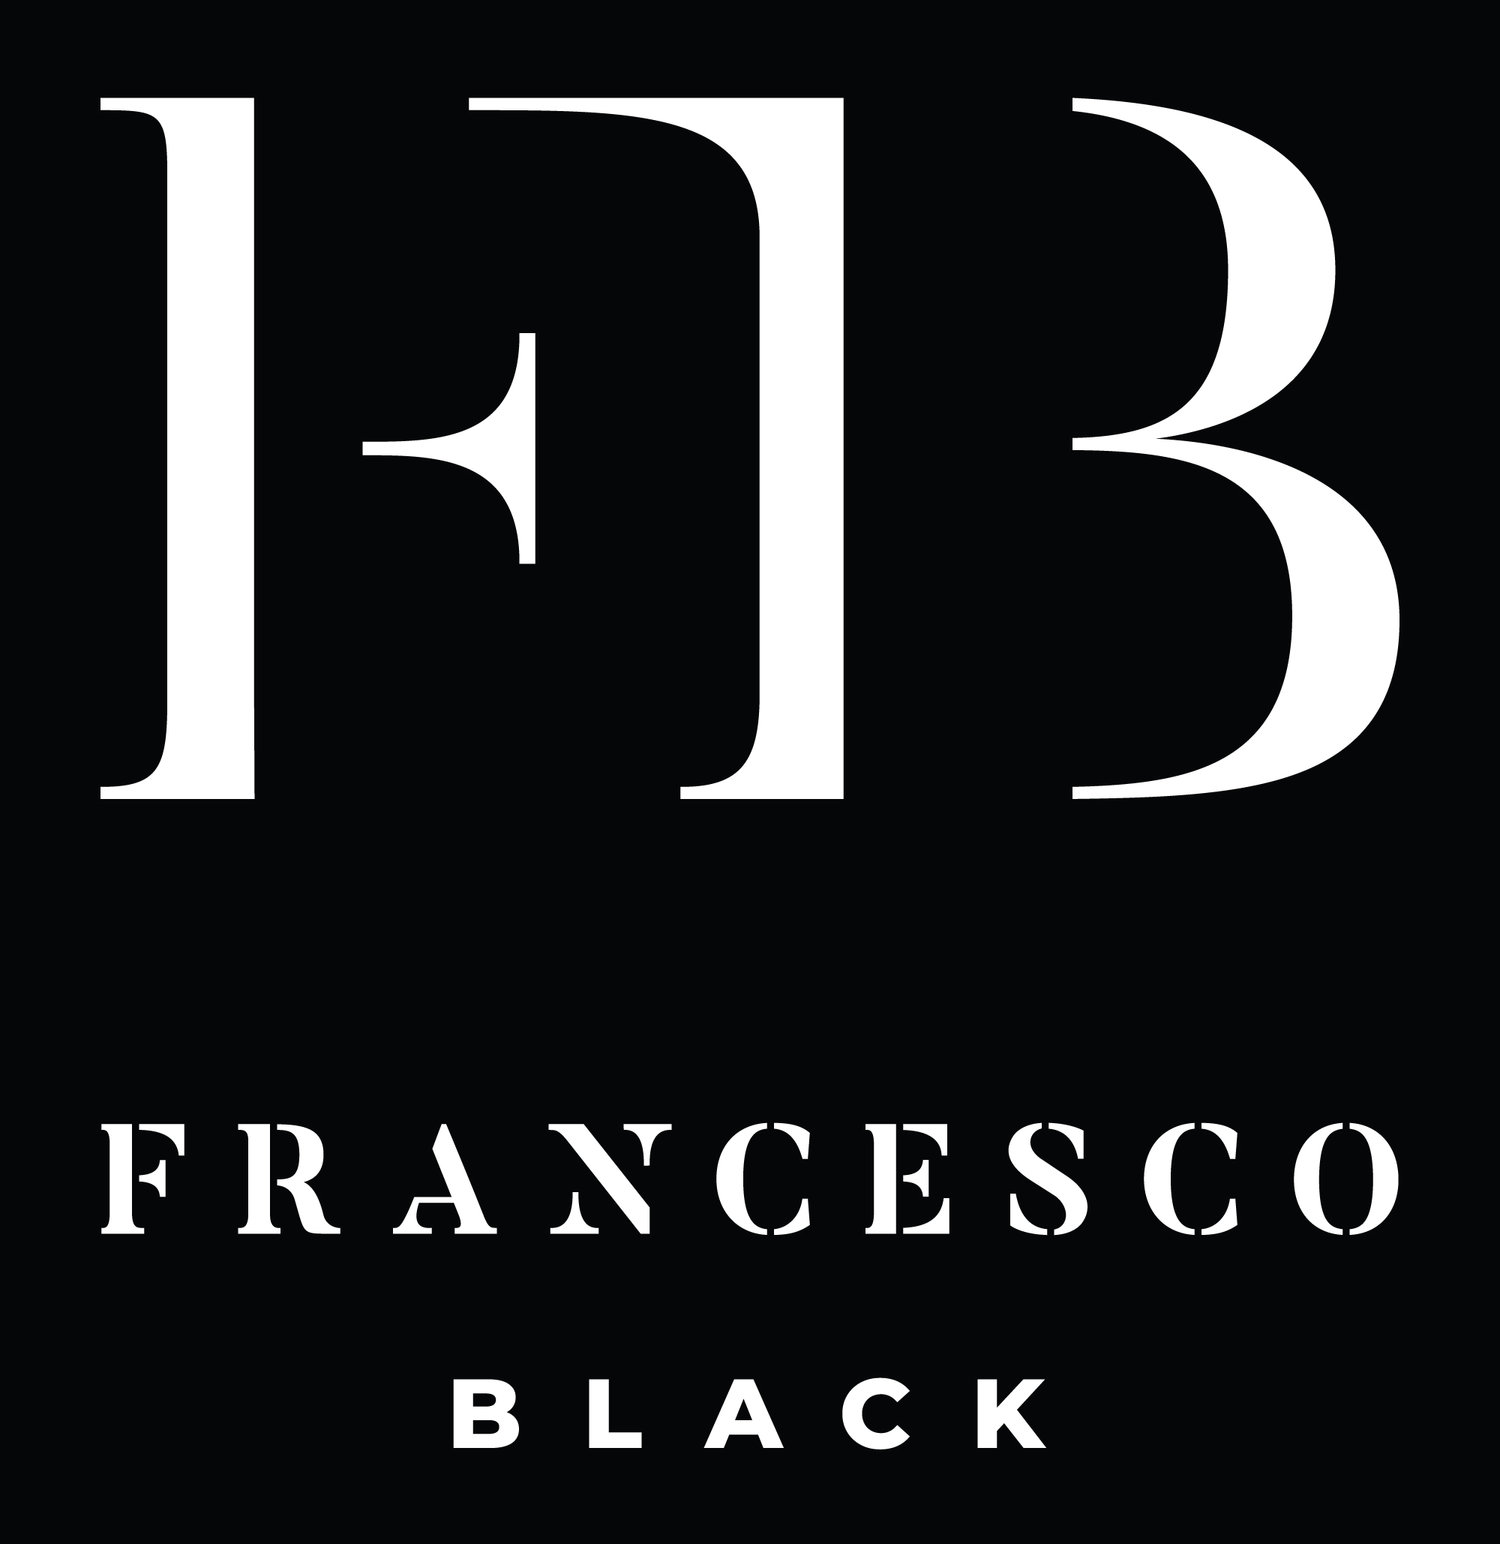 Francesco Black